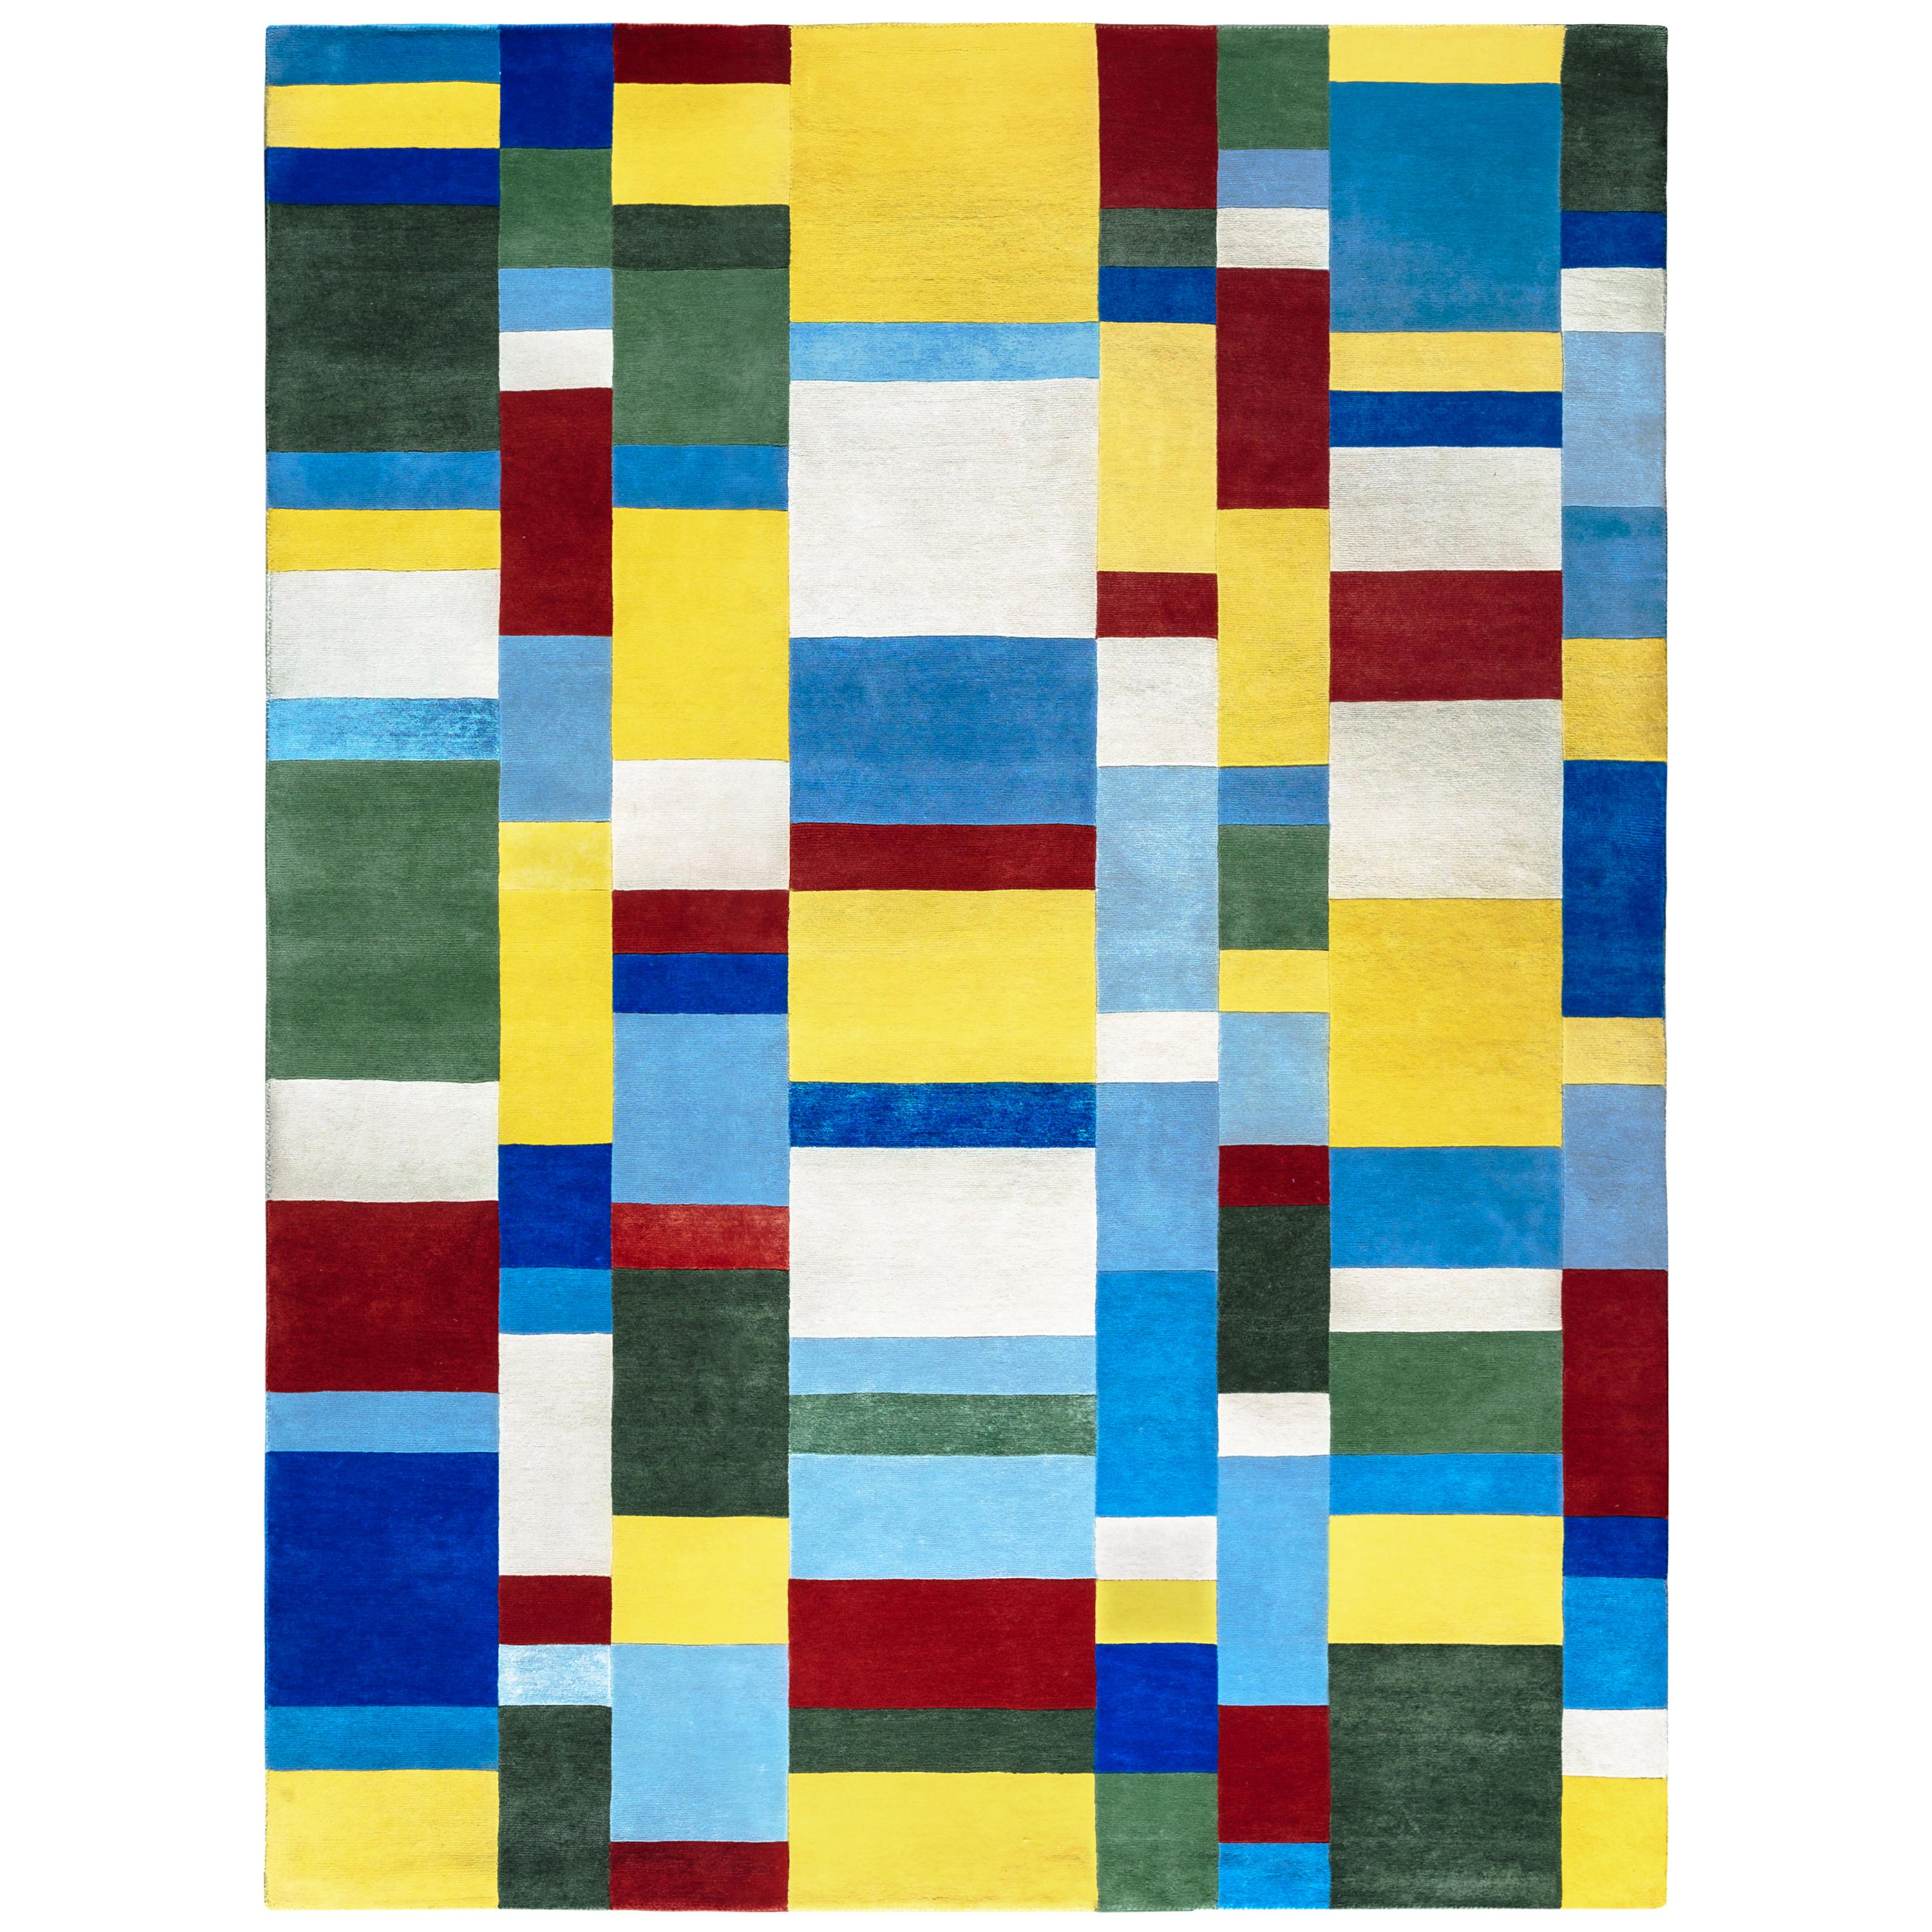 Wandteppich/Rug "Los Colores Del Espaol" von J. Zanella, limitierte Auflage